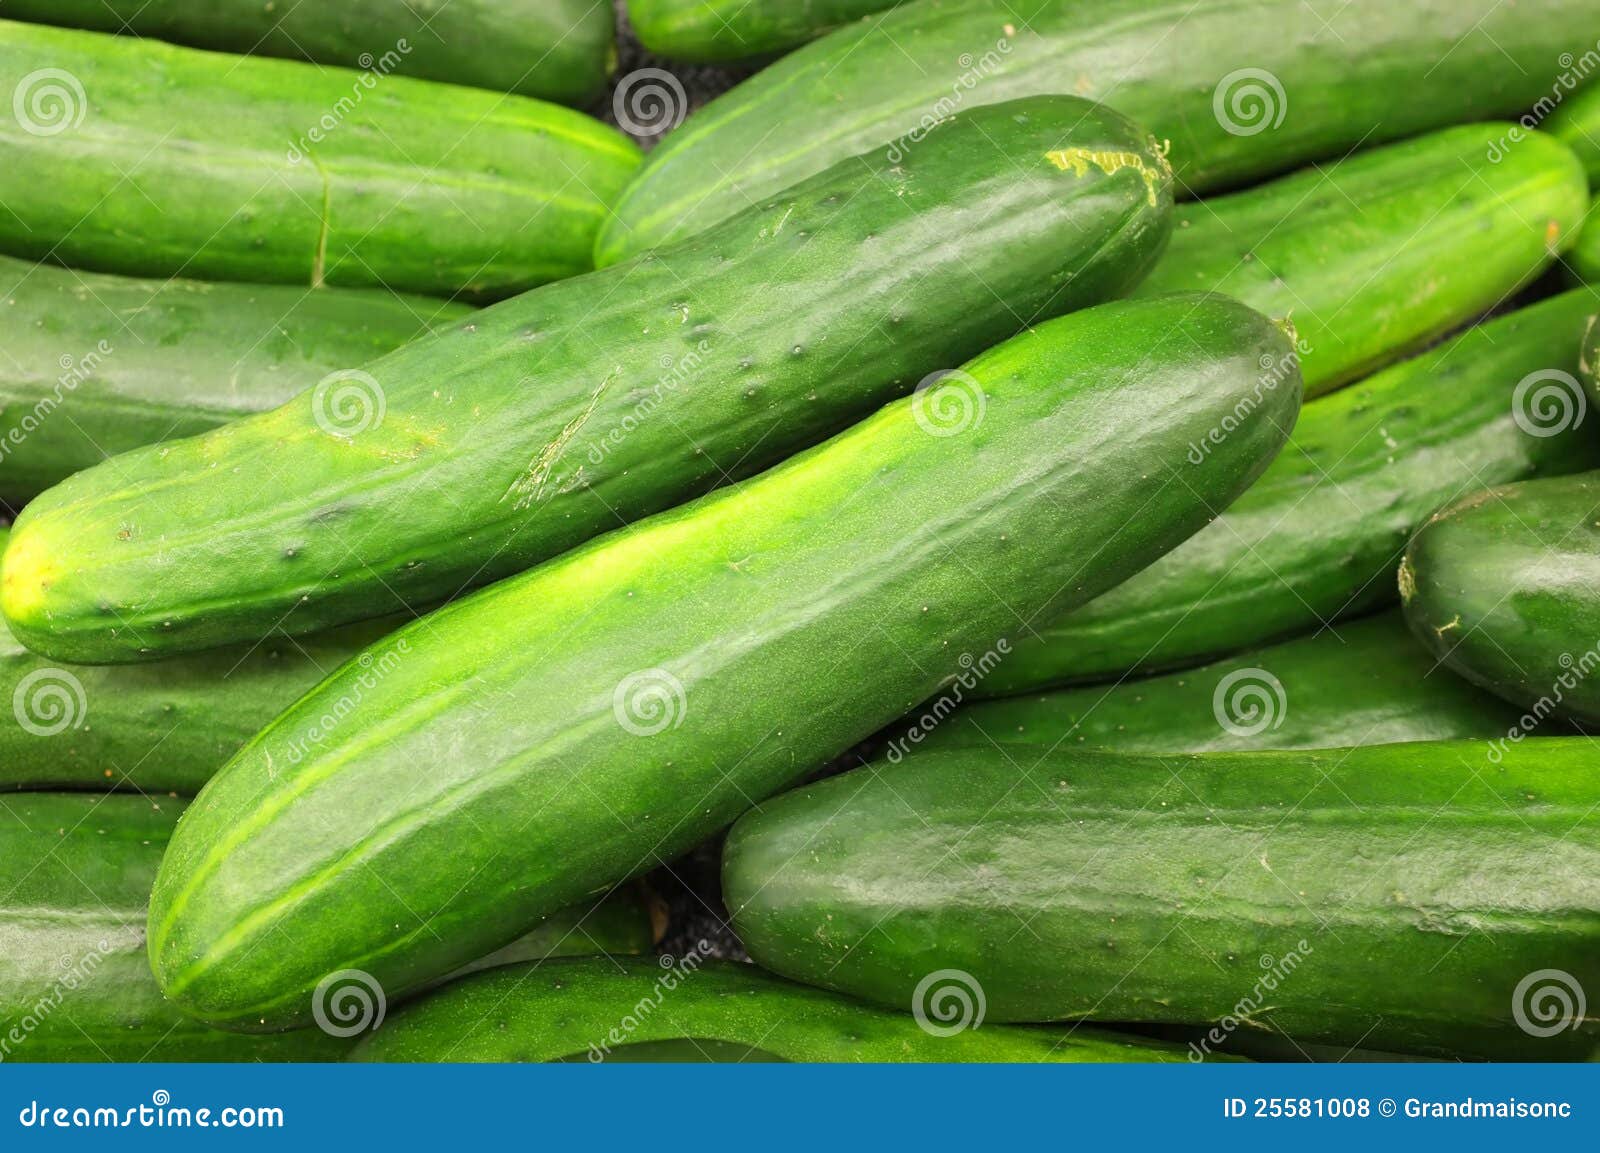 cucumbers in baskets